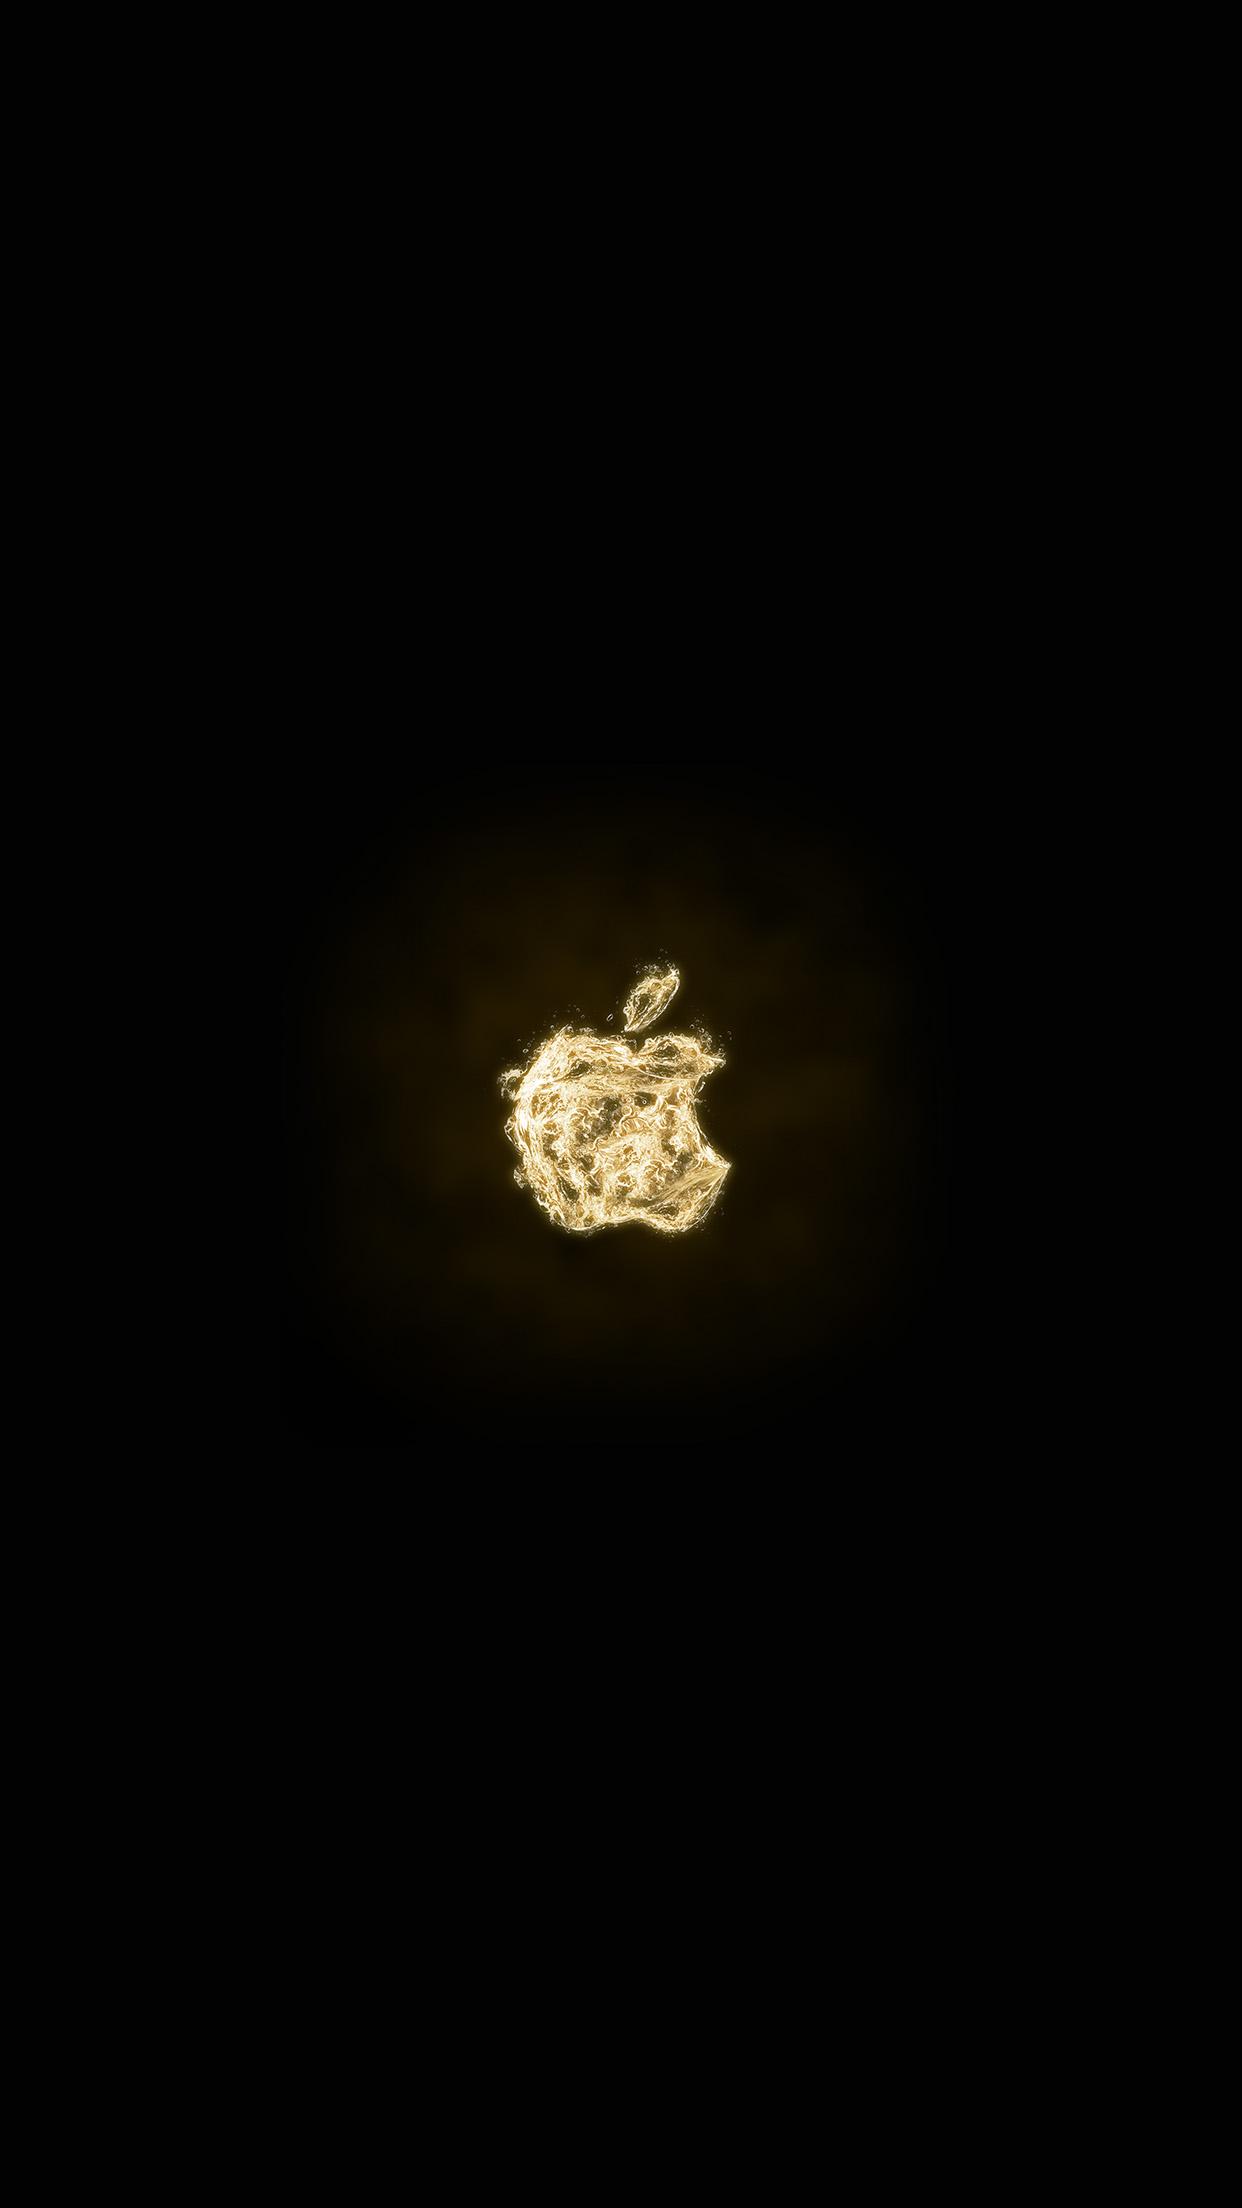 iPhone X wallpaper. apple logo dark water gold art illustration